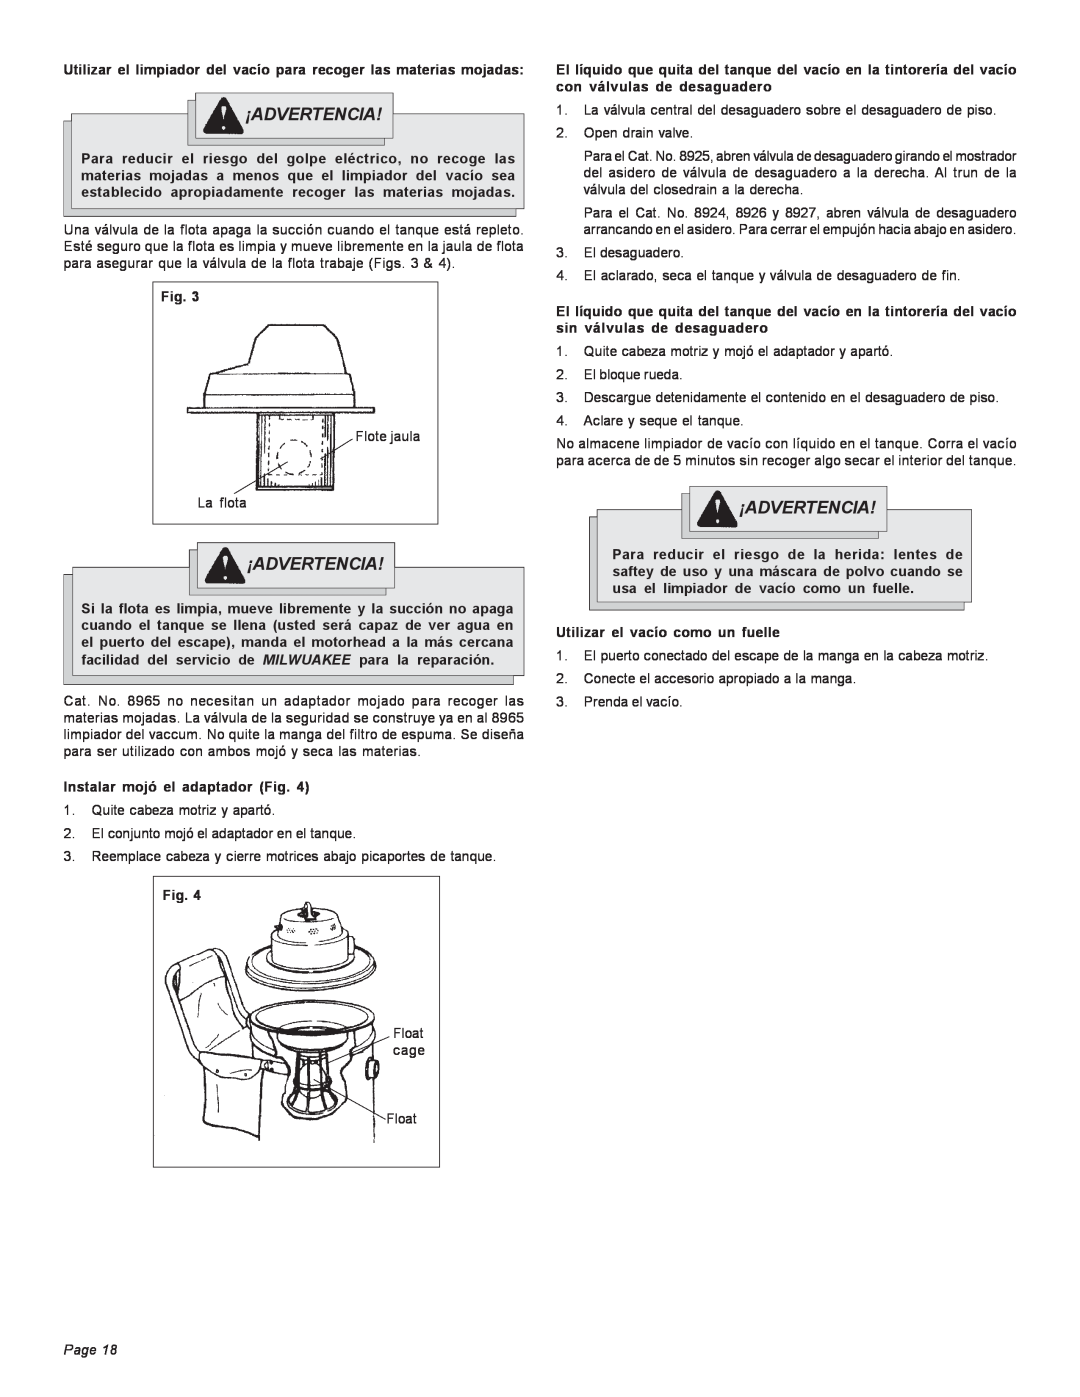 Milwaukee Heavy-Duty Commercial Vacuum manual ¡Advertencia, Page 